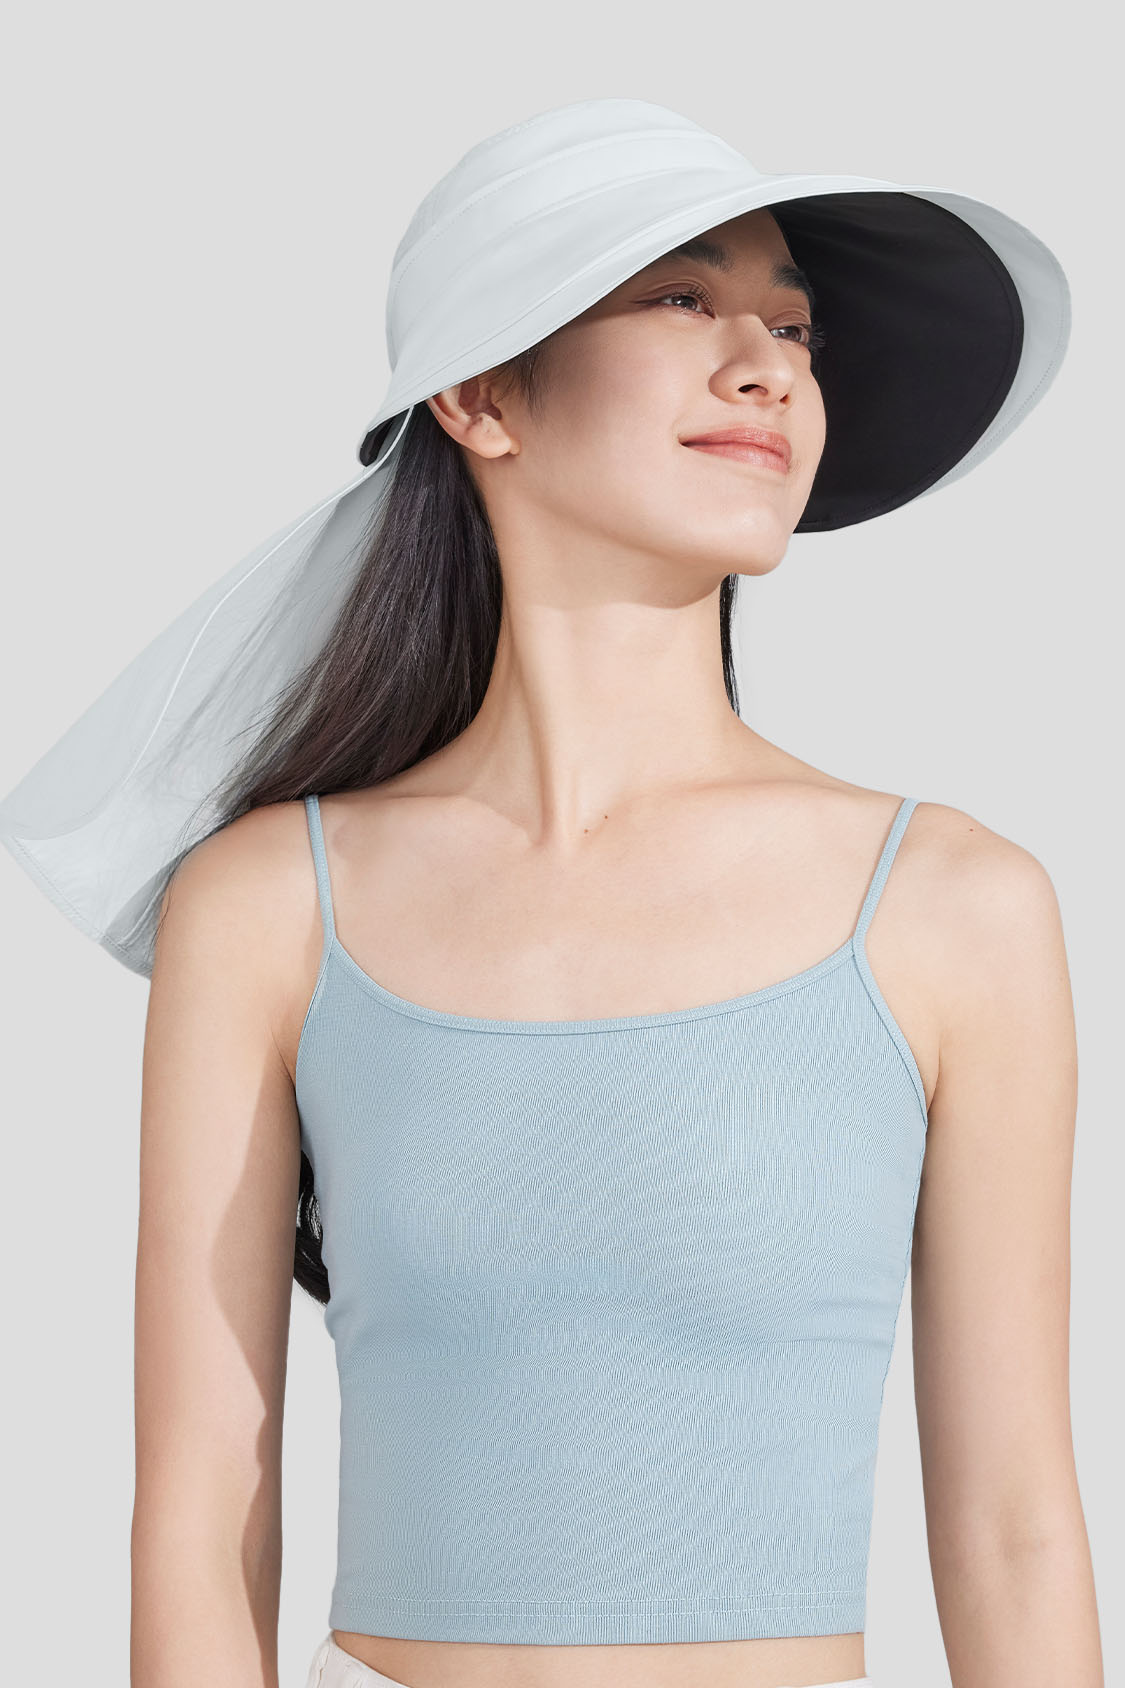 beneuder women's sun hats #color_galaxy gray